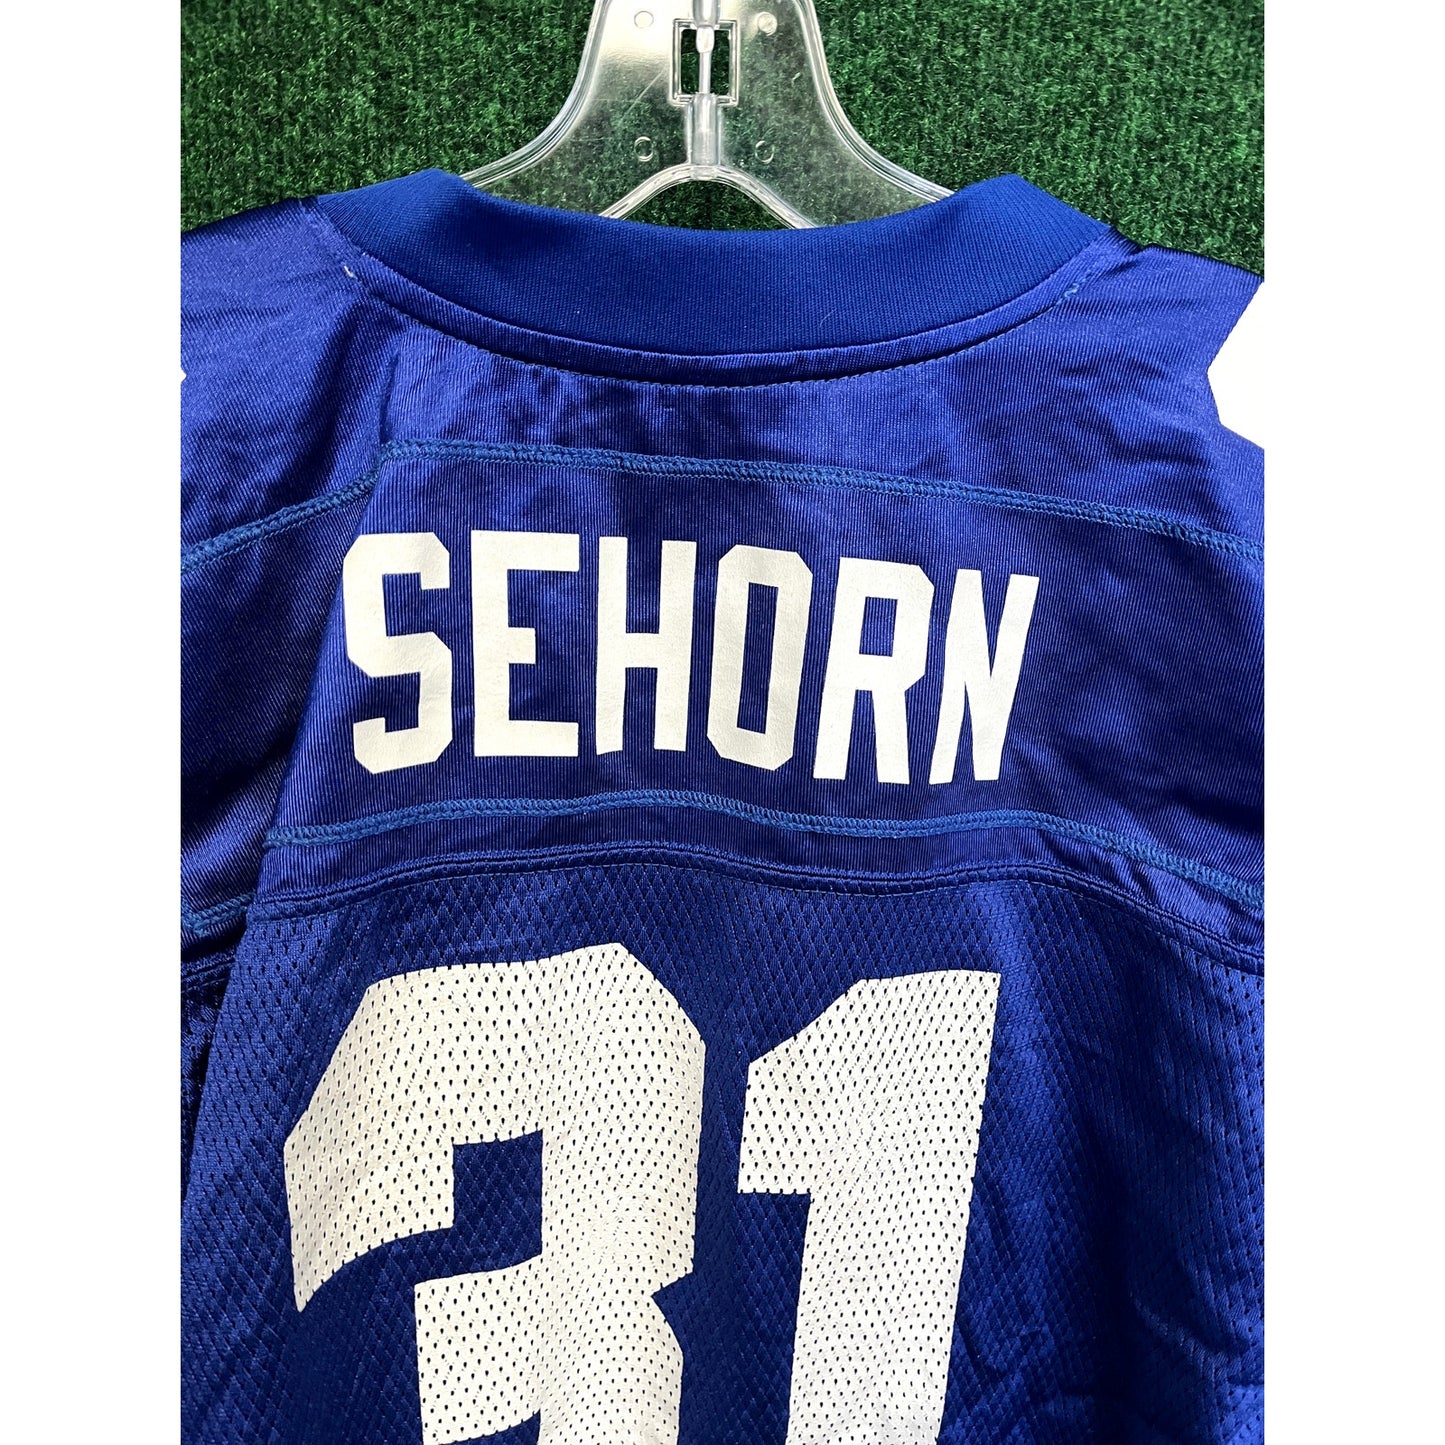 90s Reebok New York Giants NFL Jason Sehorn Cornerback Sz Medium Jersey